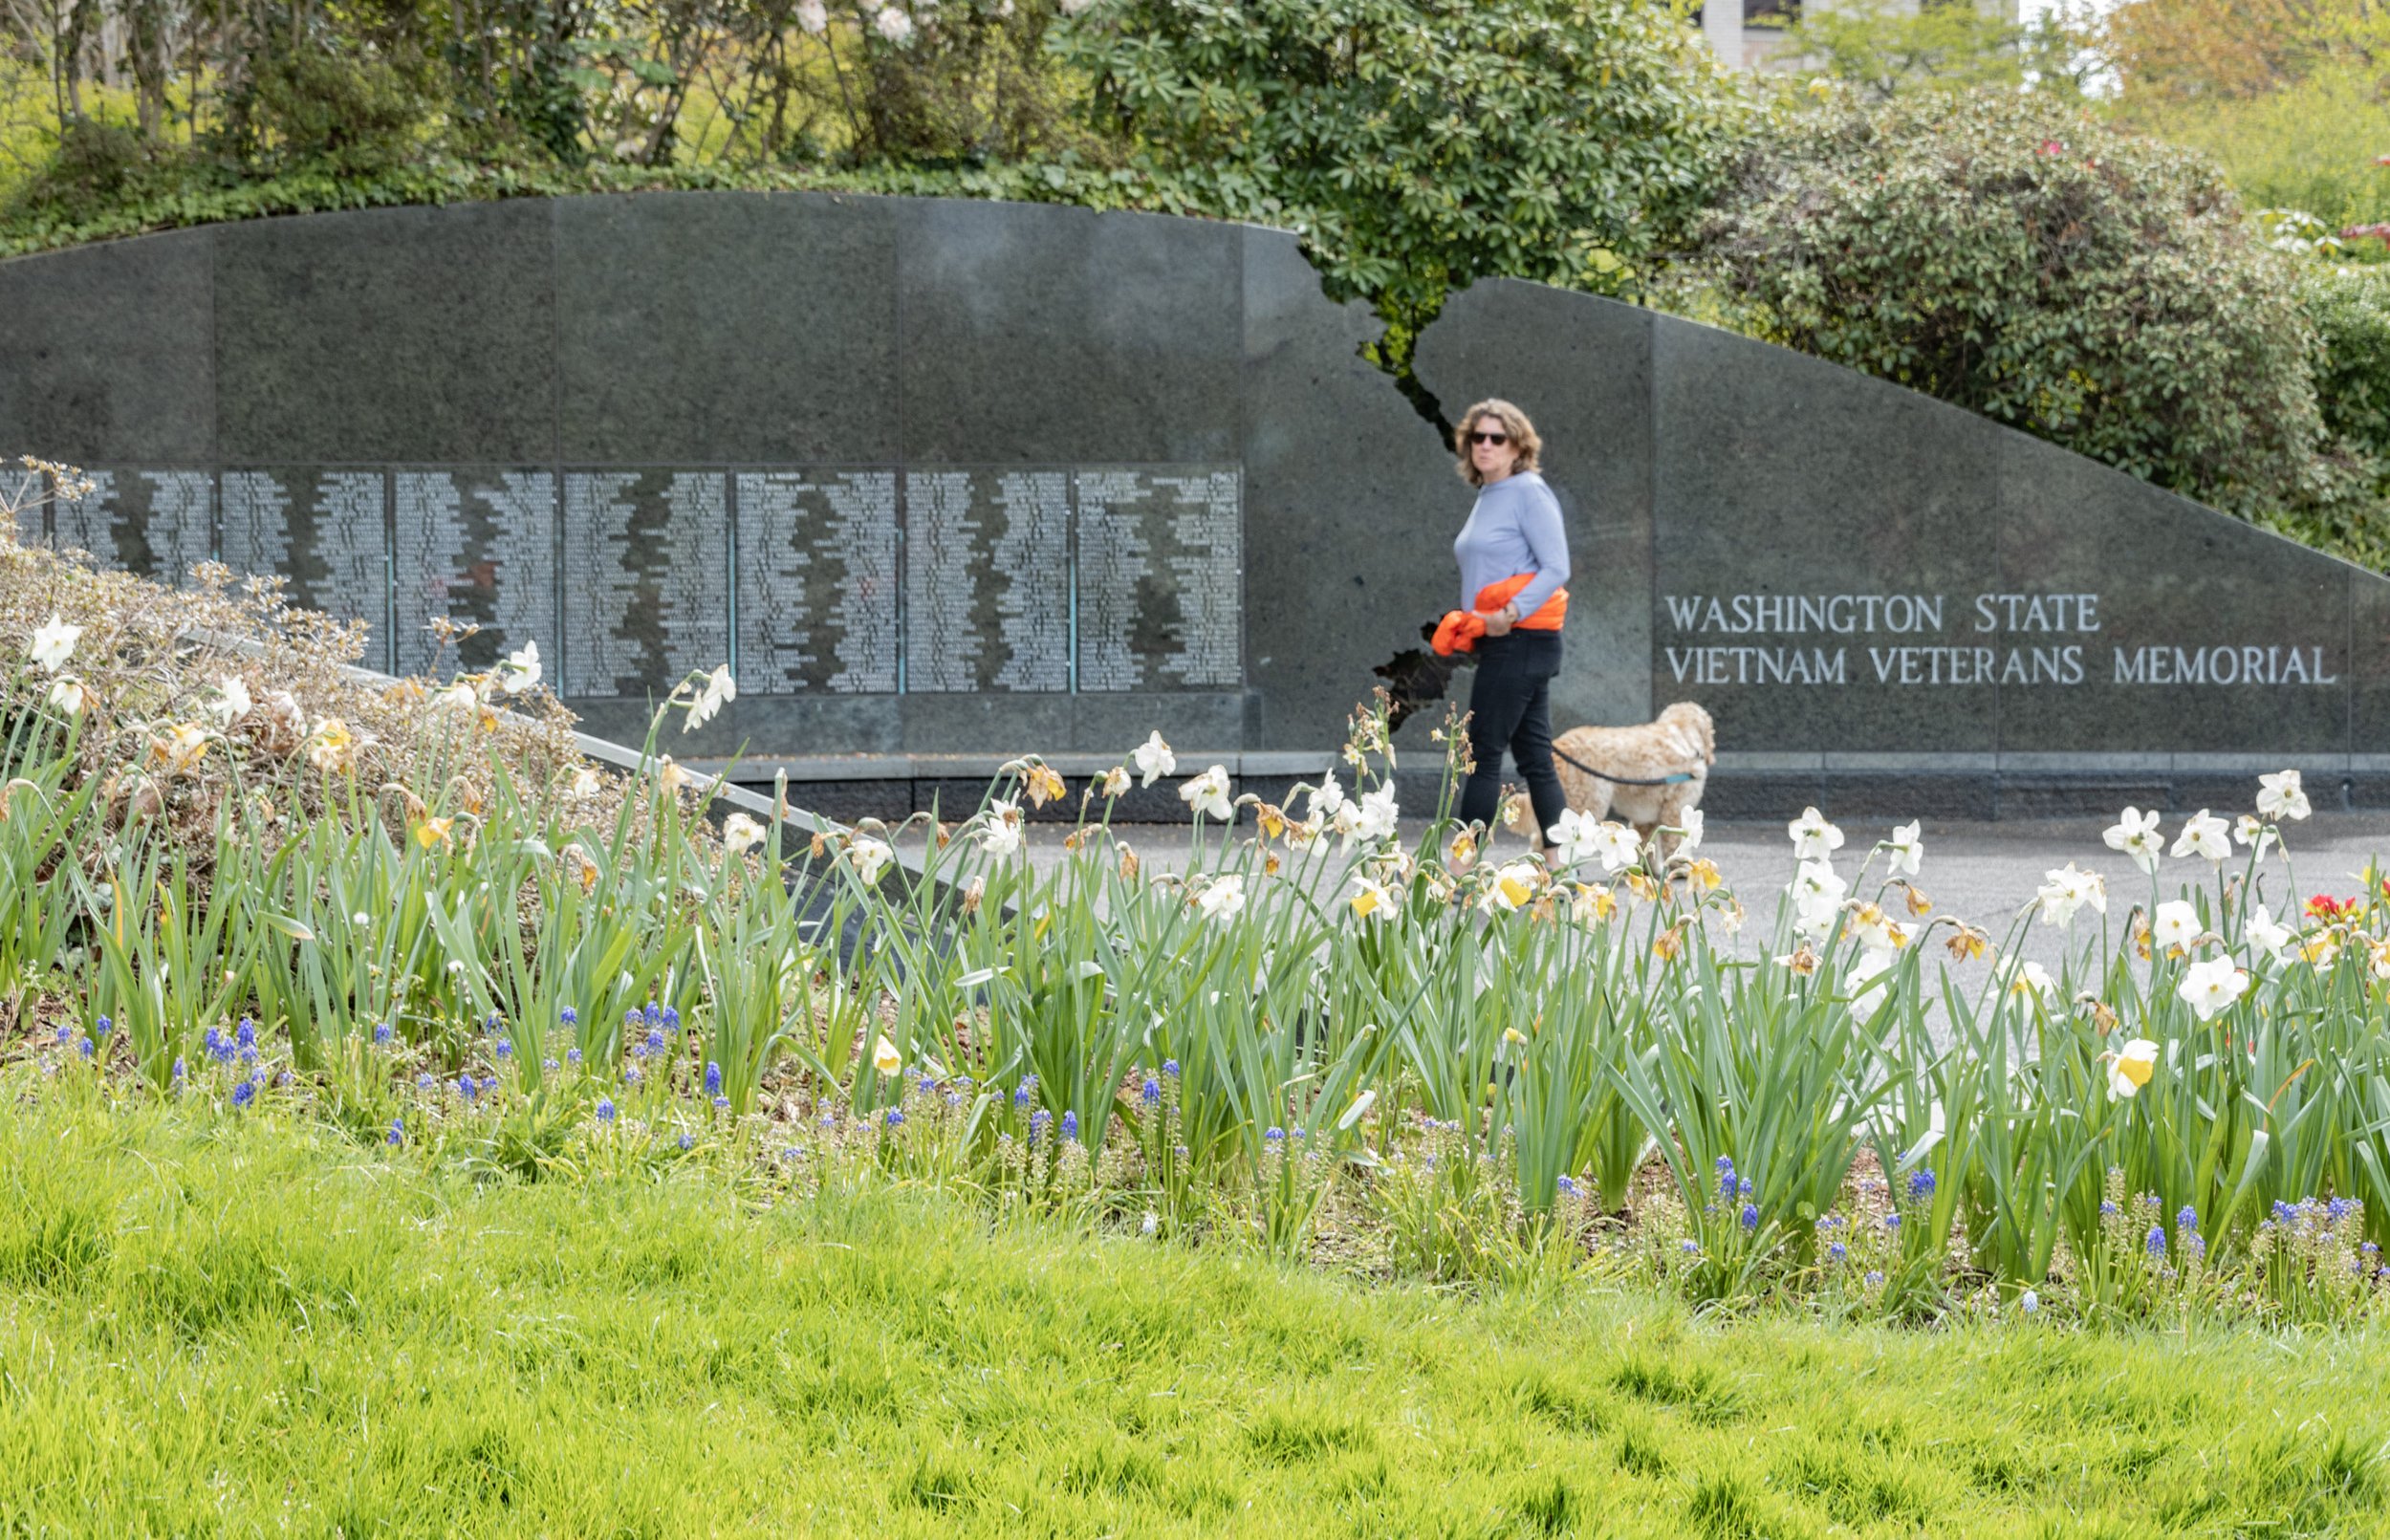 Washington State Vietnam Veterans Memorial